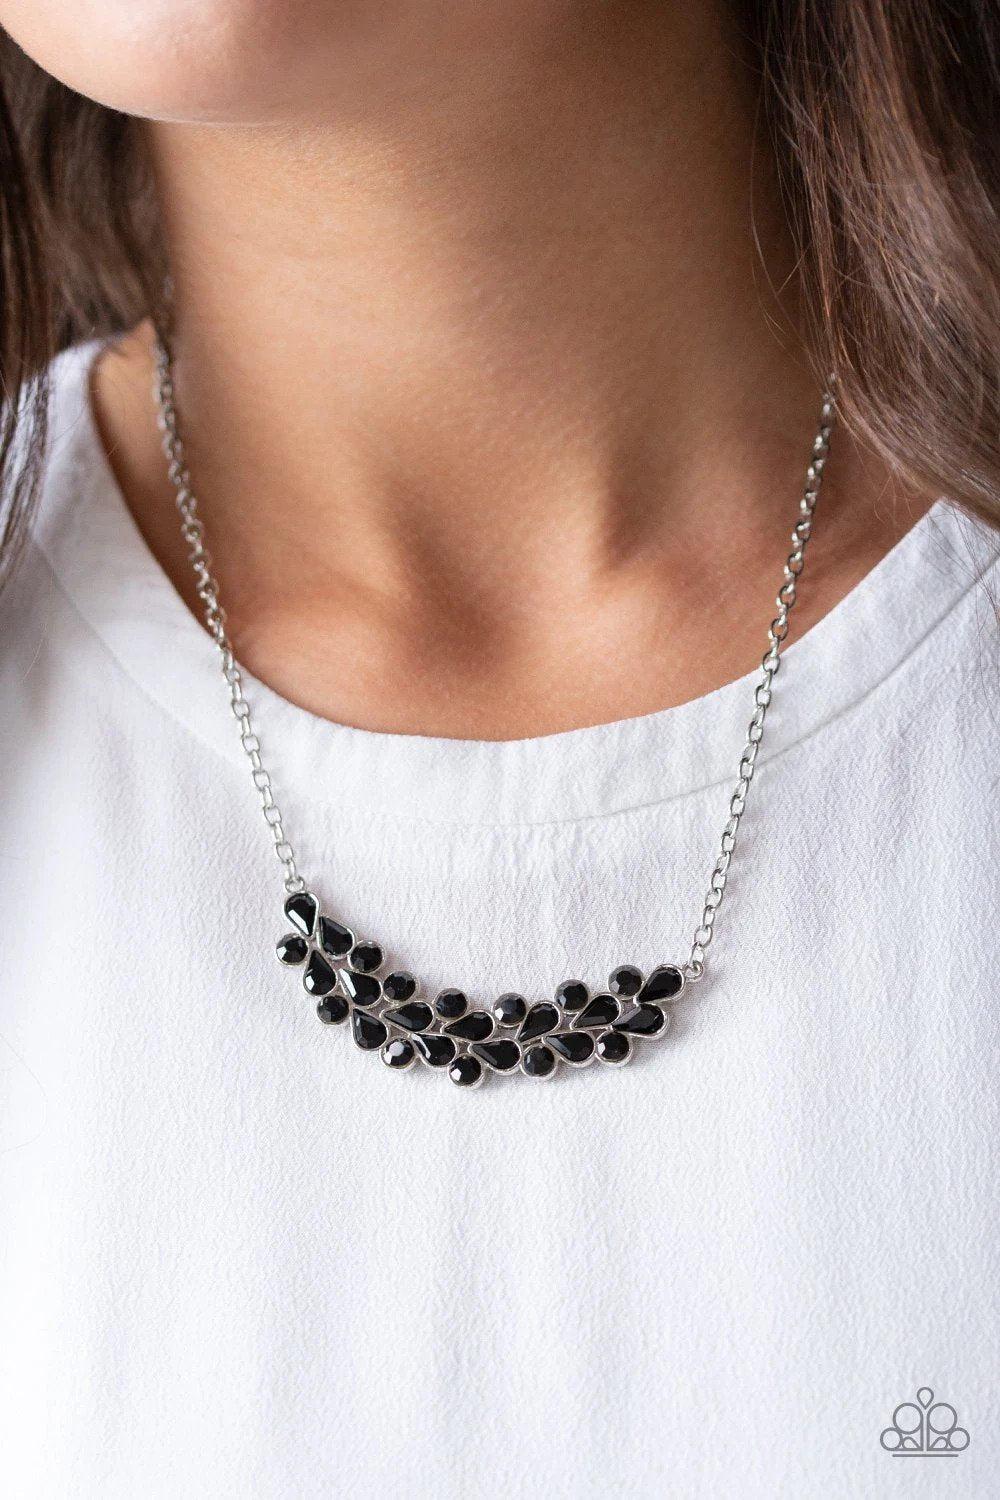 Special Treatment Black Rhinestone Necklace - Paparazzi Accessories - model -CarasShop.com - $5 Jewelry by Cara Jewels